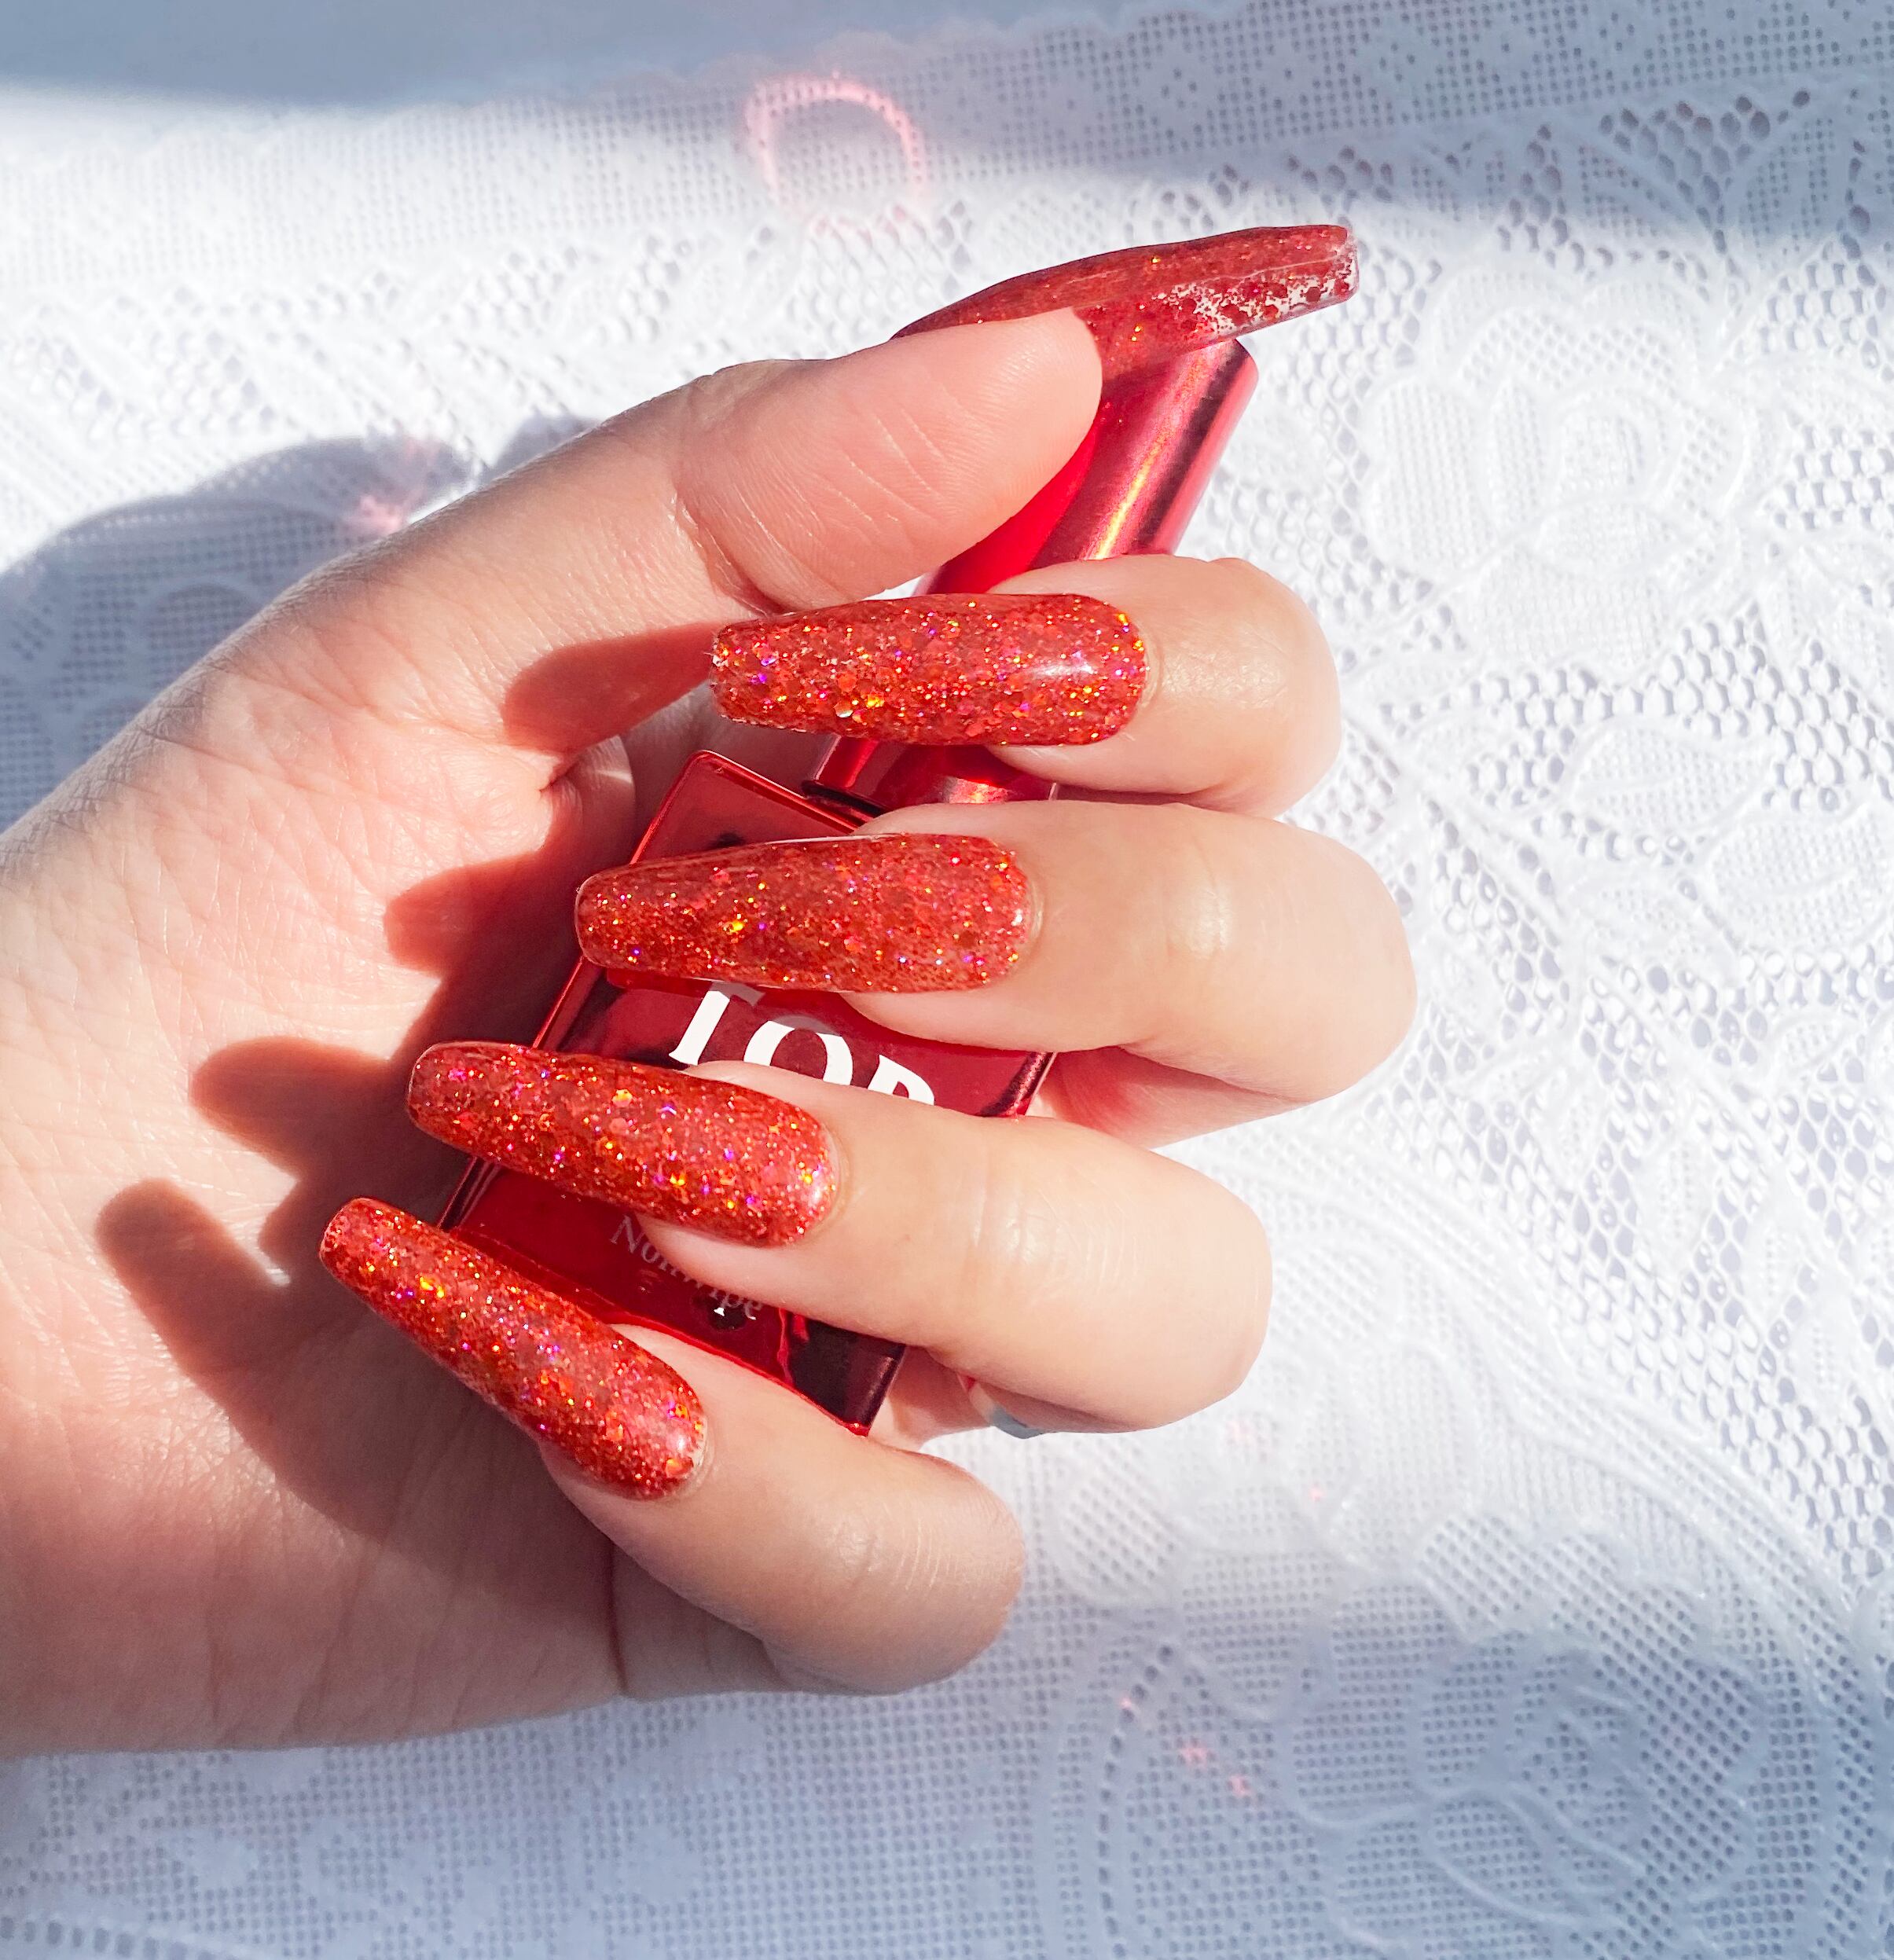 CND Shellac 0.25oz - Devil Red | Classique Nails Beauty Supply Inc. |  Reviews on Judge.me